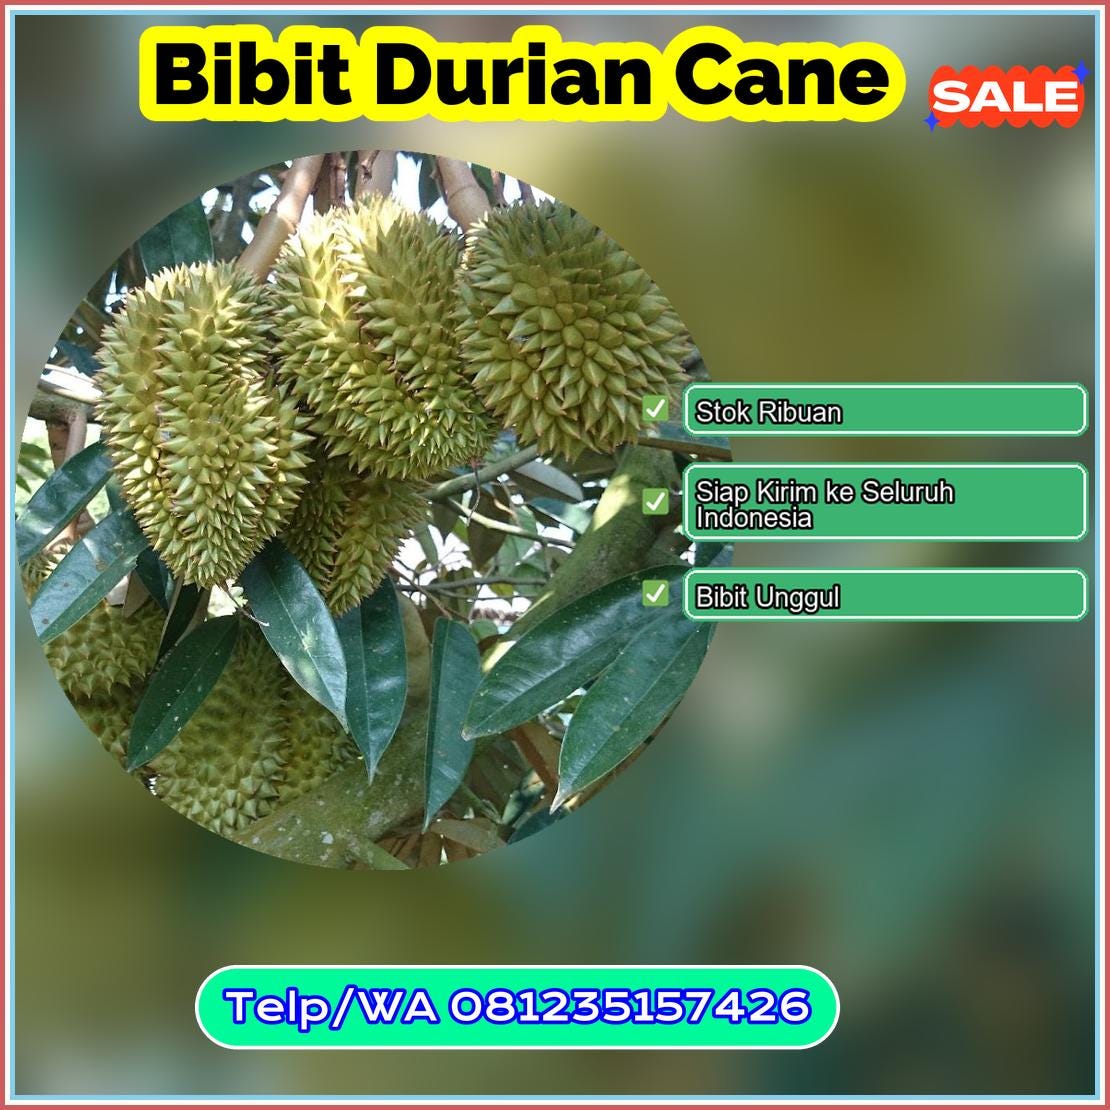 Harga Bibit Durian Cane Kulon Progo